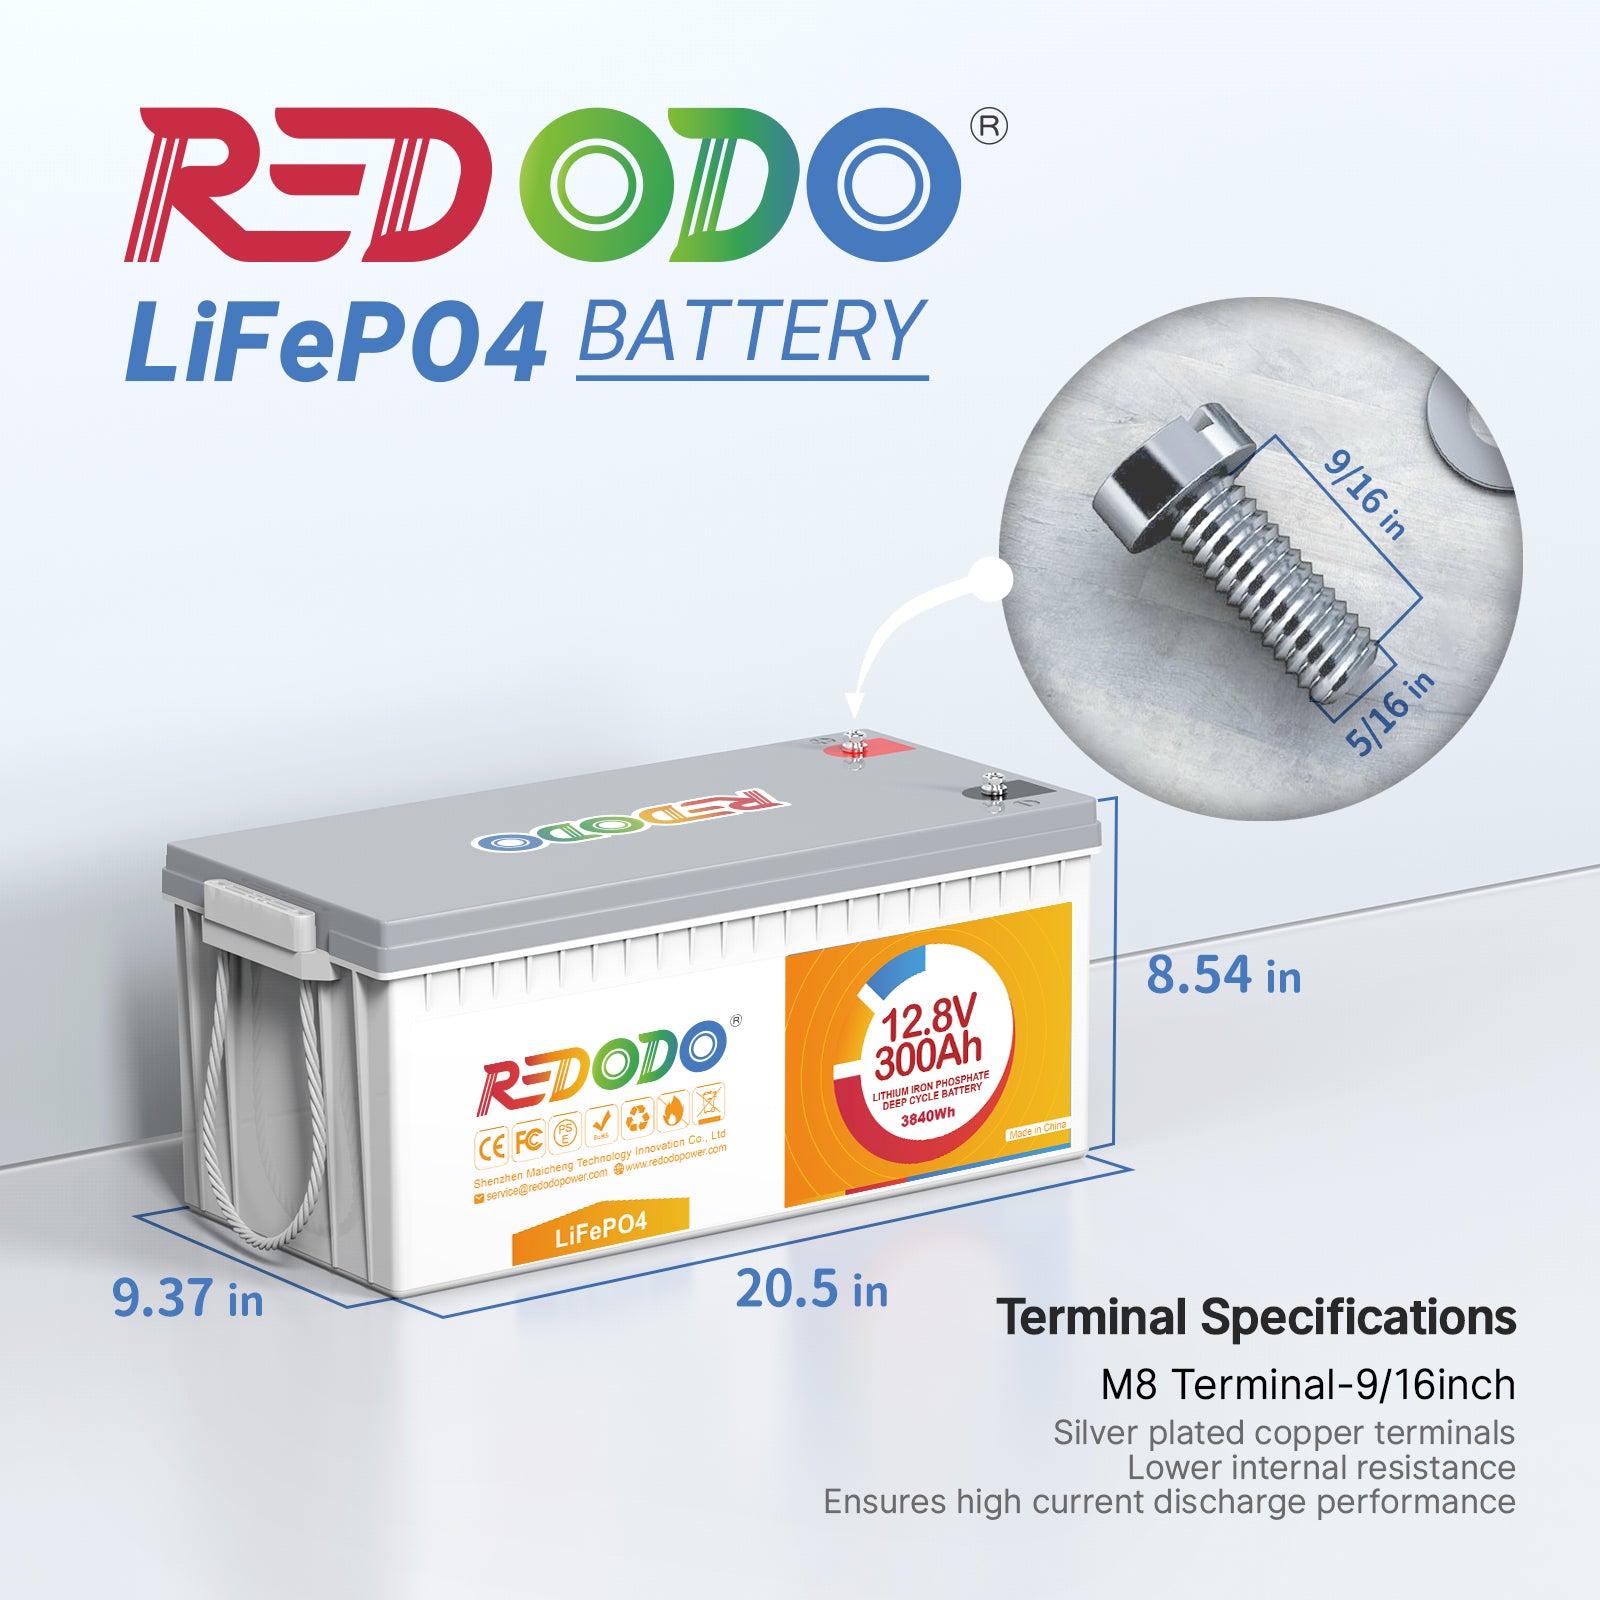 Redodo 12V 300Ah LiFePO4 Battery | 3.84kWh & 2.56kW